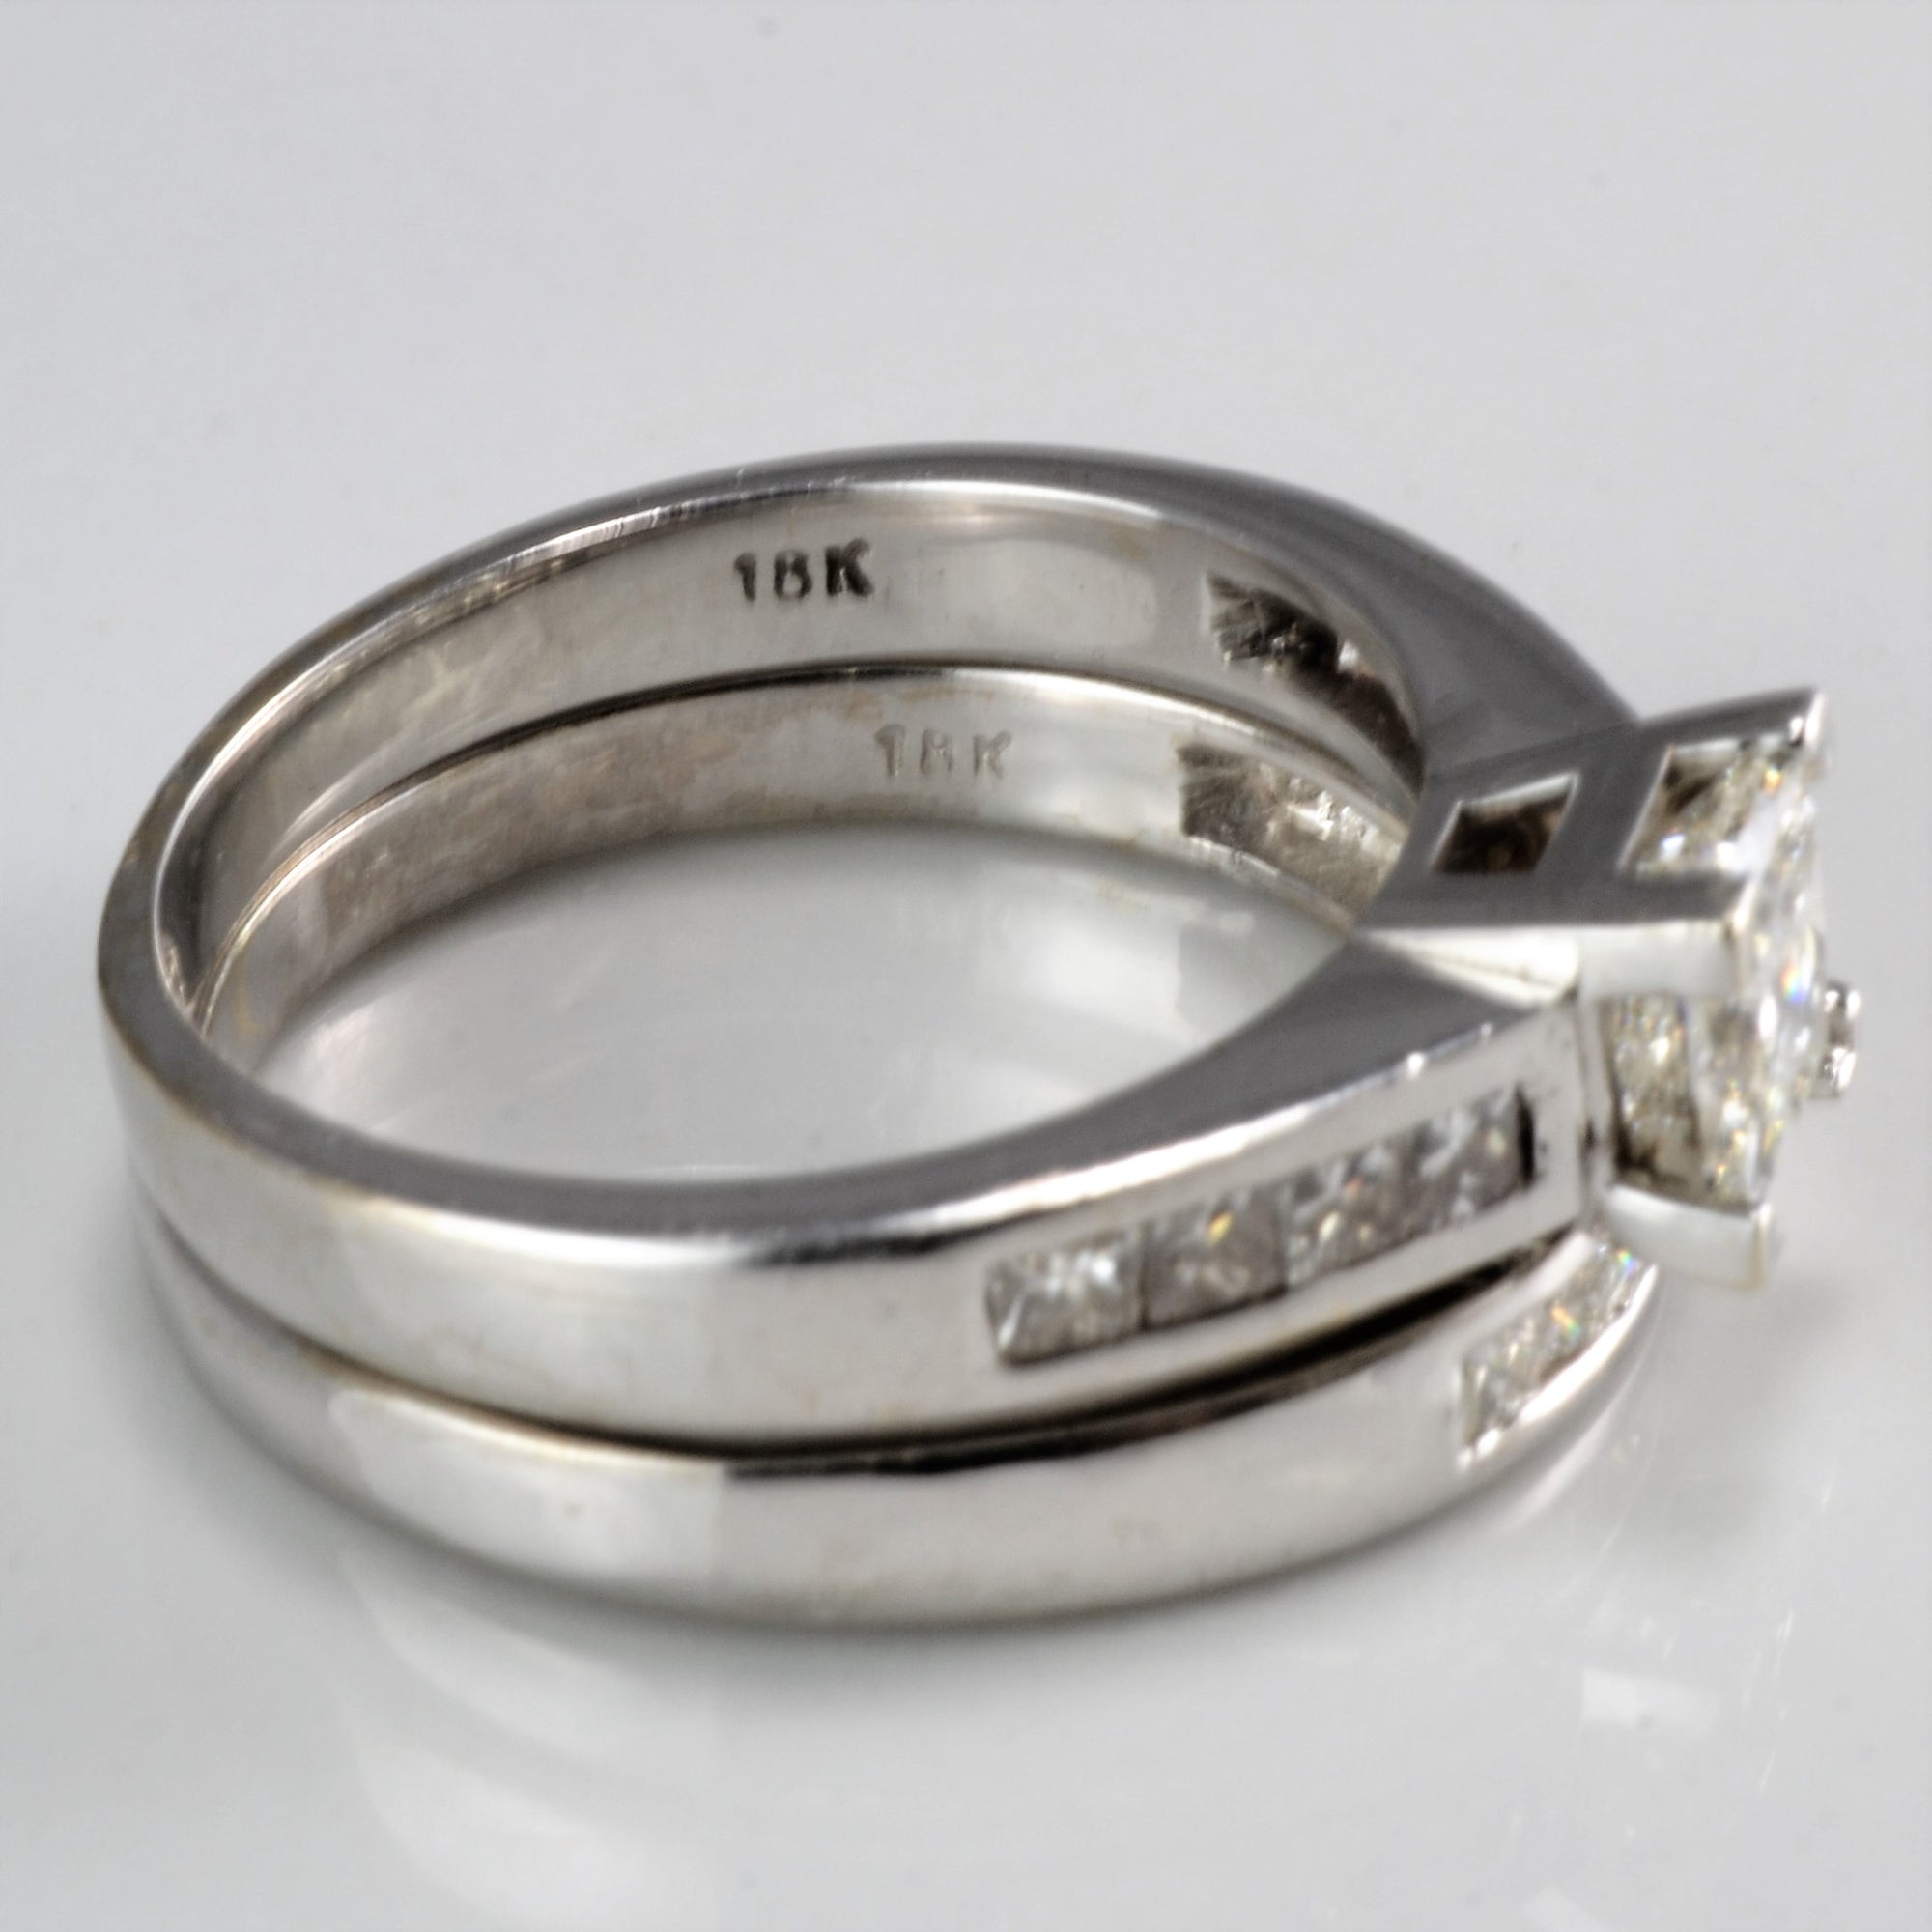 Channel Princess Diamond Wedding Ring Set | 1.33ctw | SZ 6.5 |